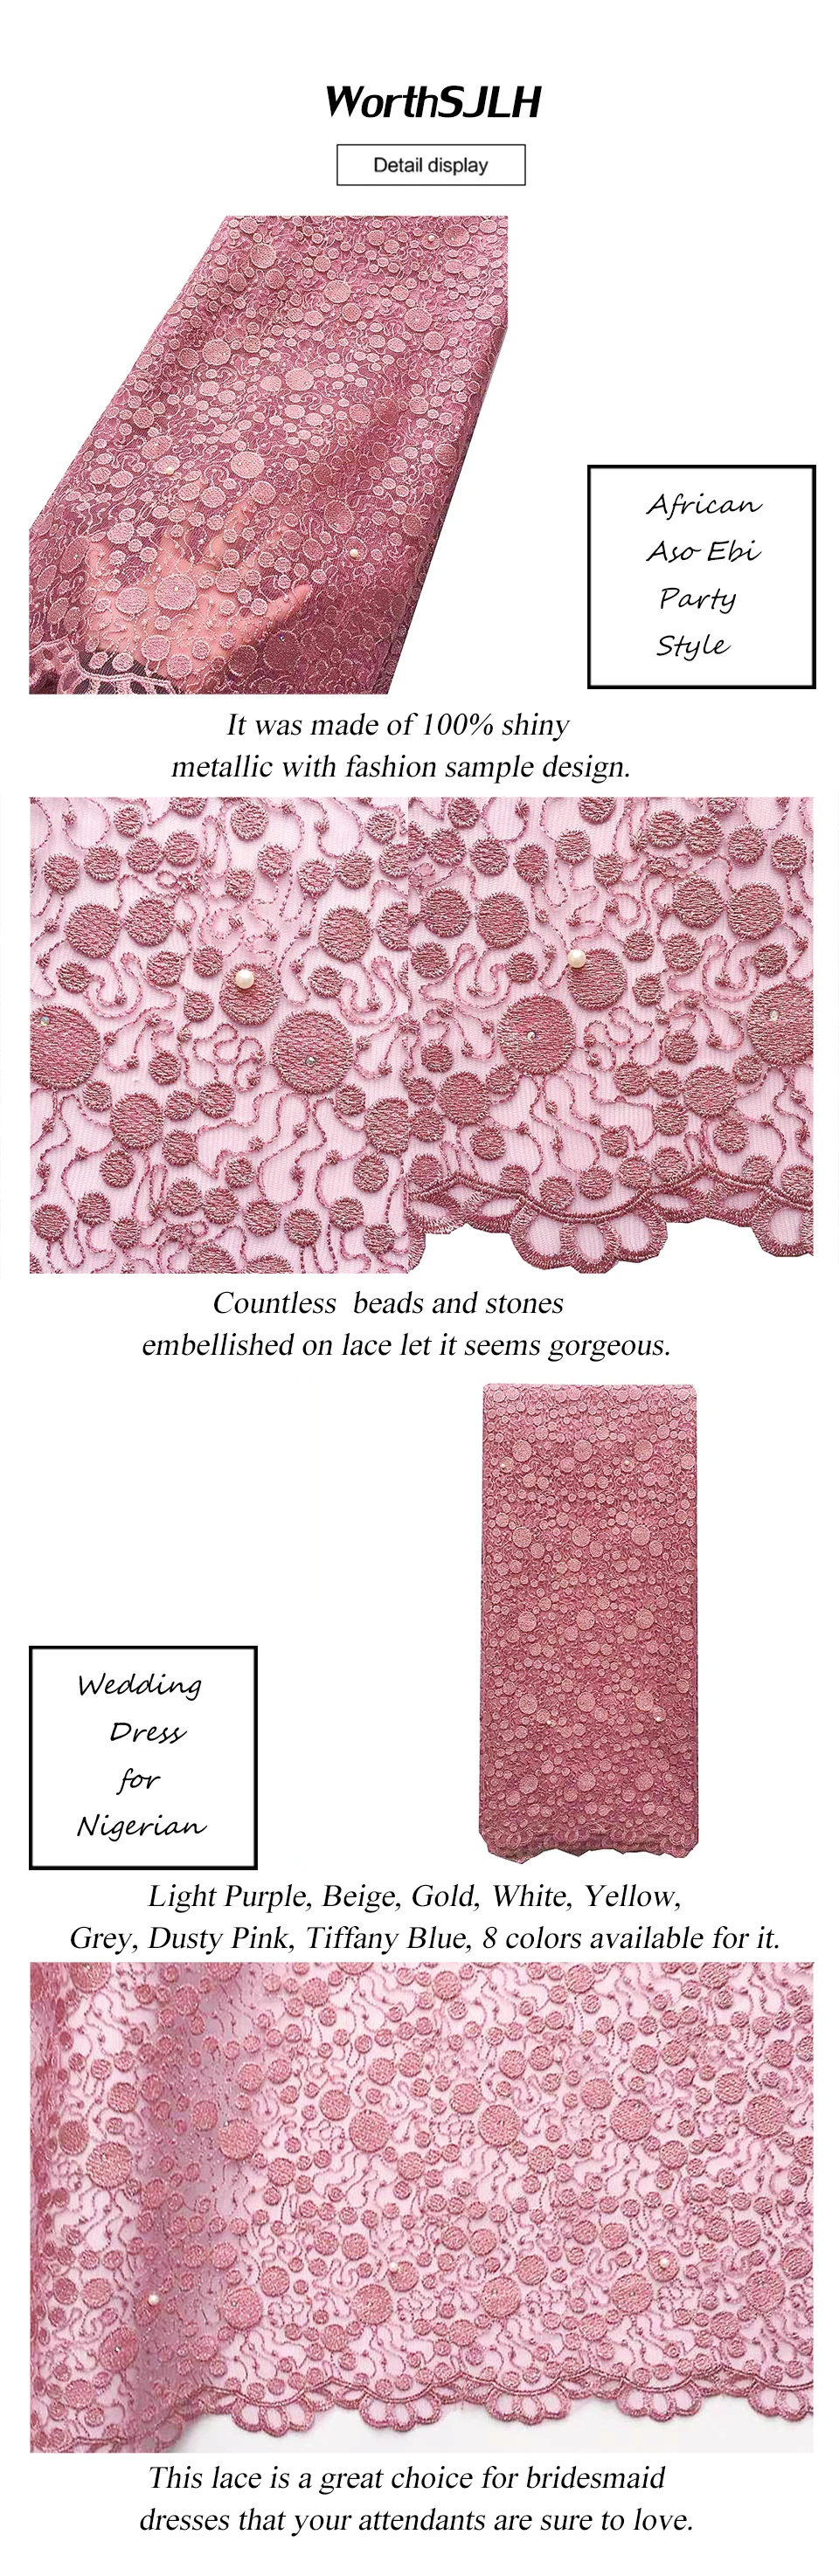 Африканская французская кружевная ткань розовая швейцарская вуаль кружева в швейцарском тюле чистая свадебная кружевная ткань с бисером и камнями